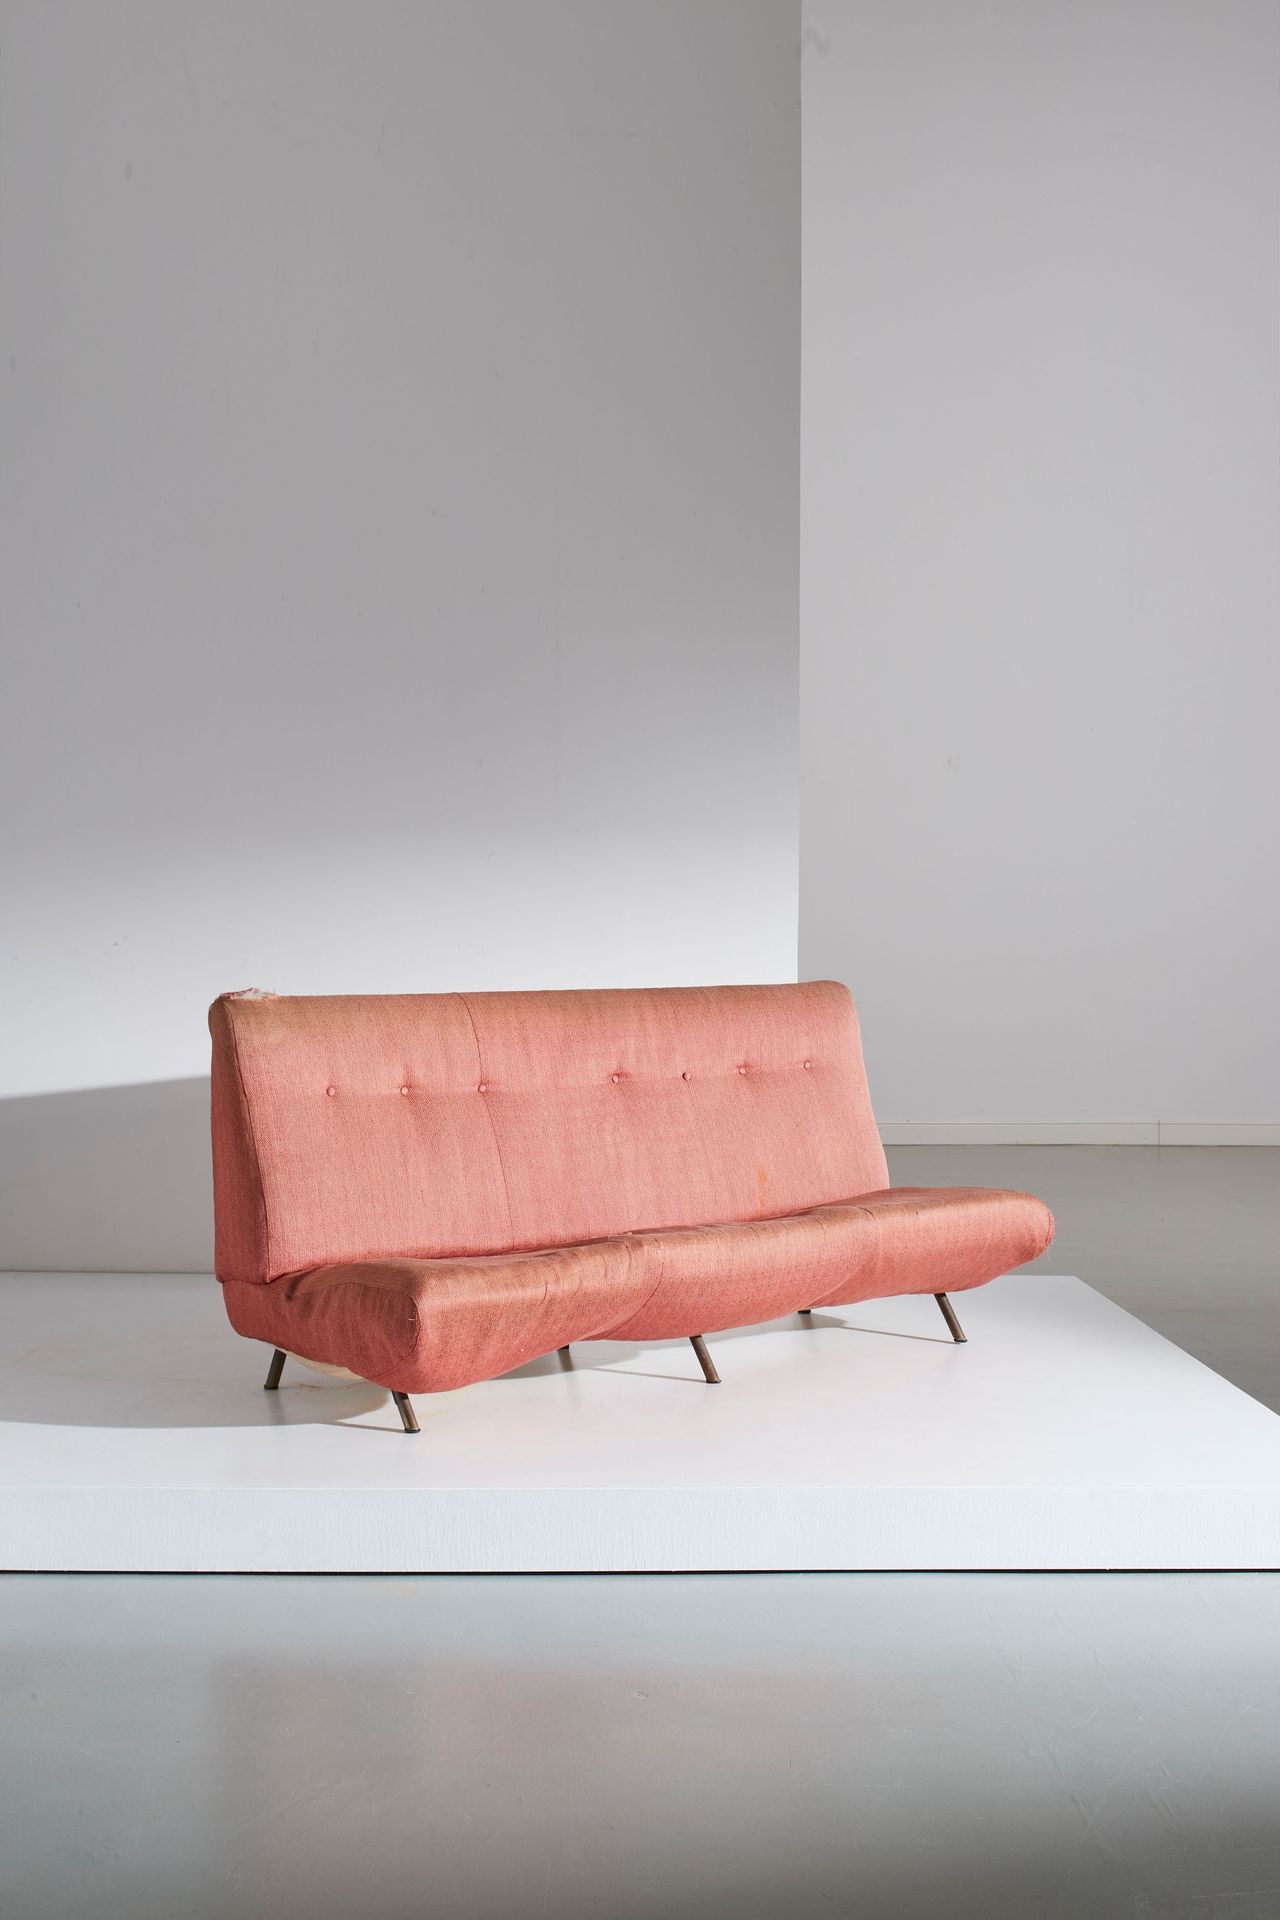 Marco Zanuso IX Triennale沙发。黄铜，软垫织物。Production Arflex 1956 ca.
Cm 84x180x74
A SE&hellip;